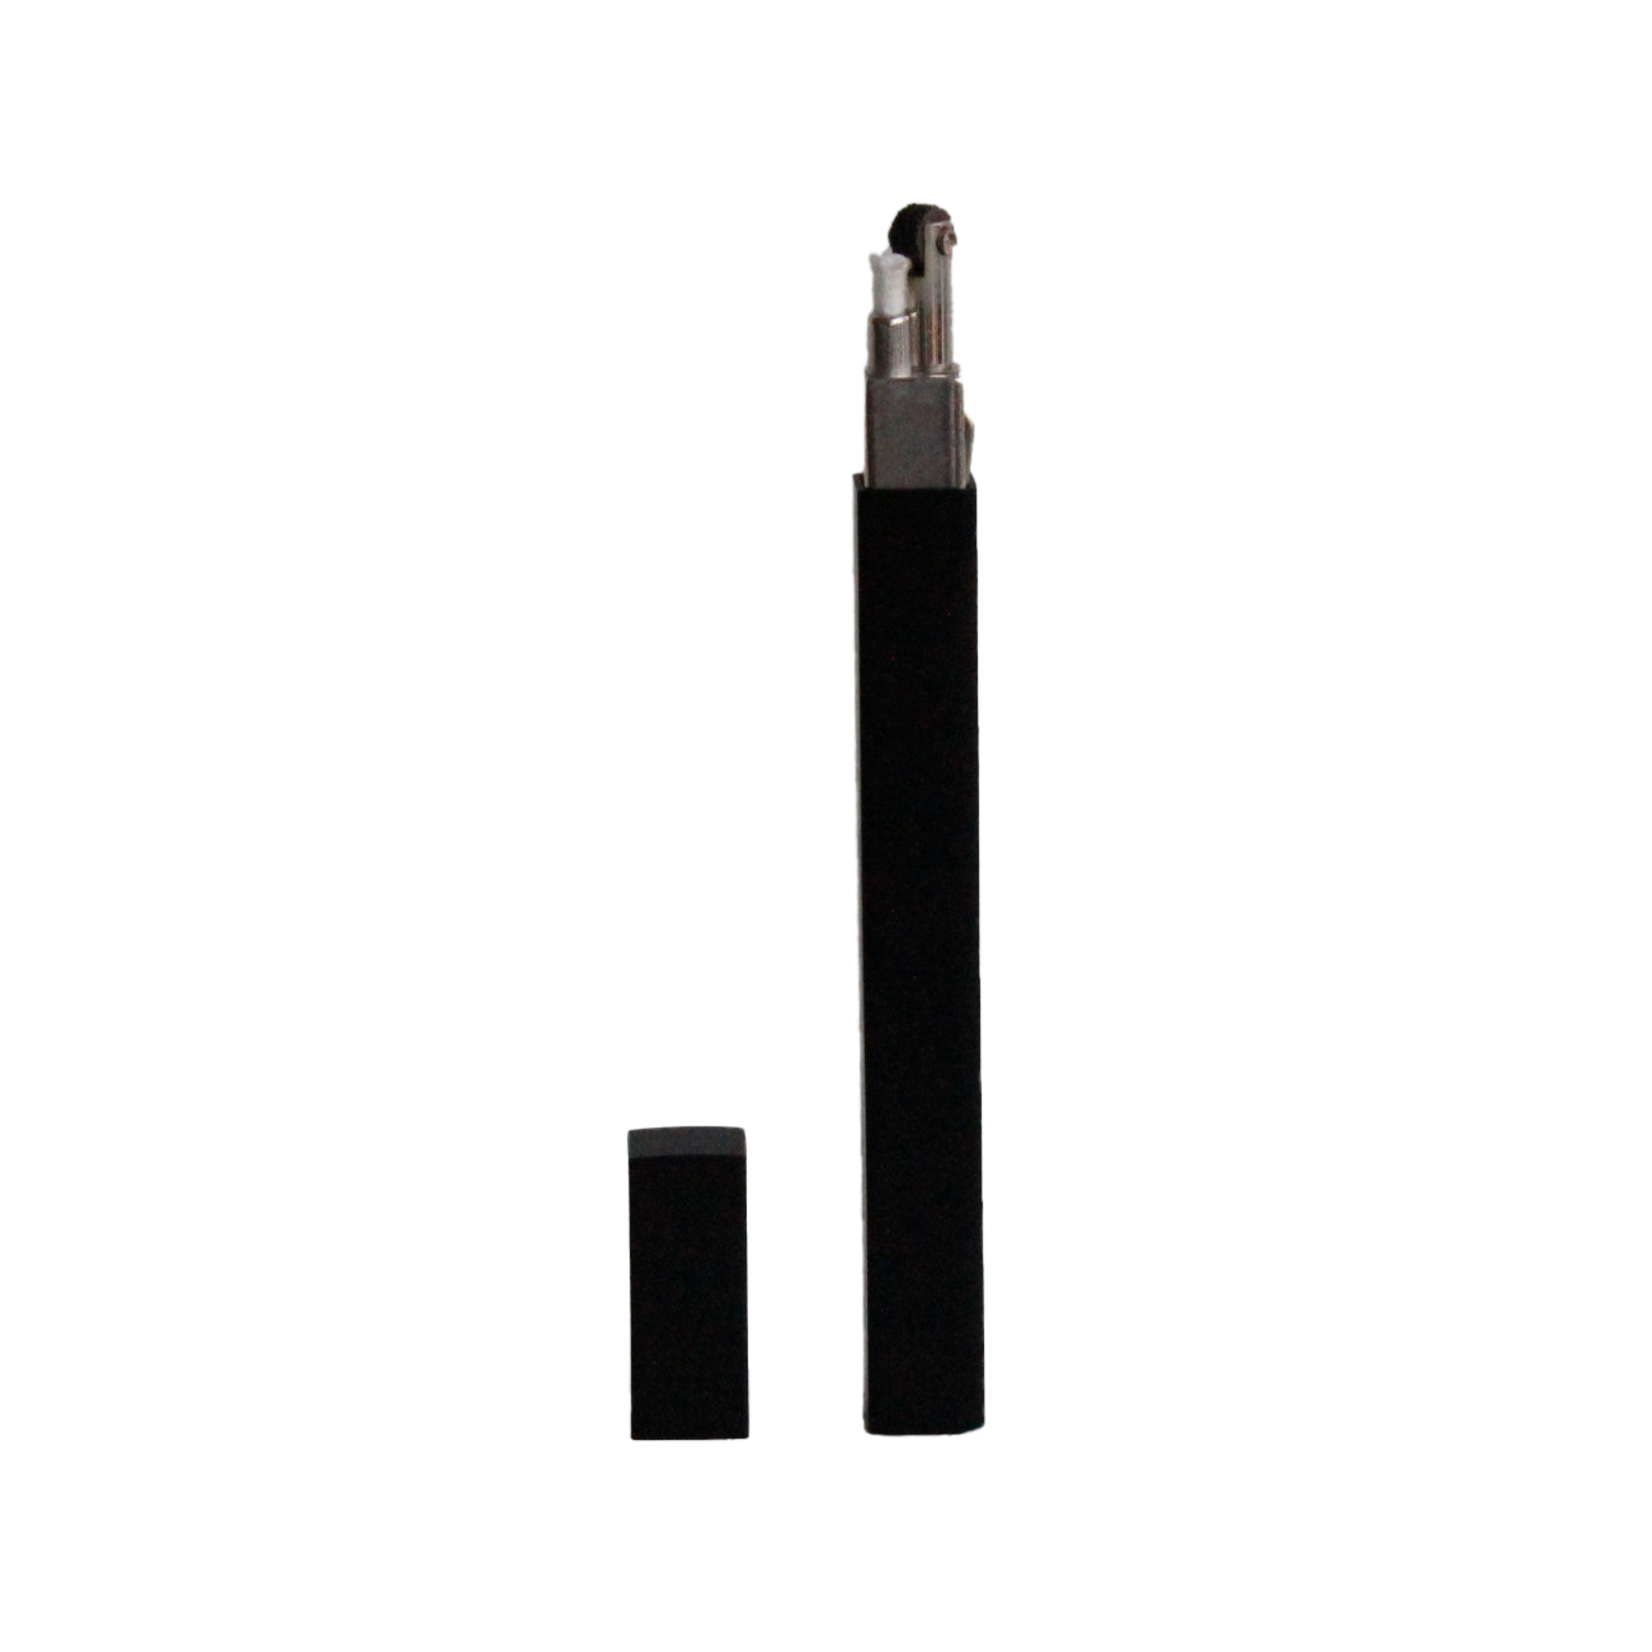 Tsubota Pearl Tsubota Pearl Mono Stick Lighter - Black